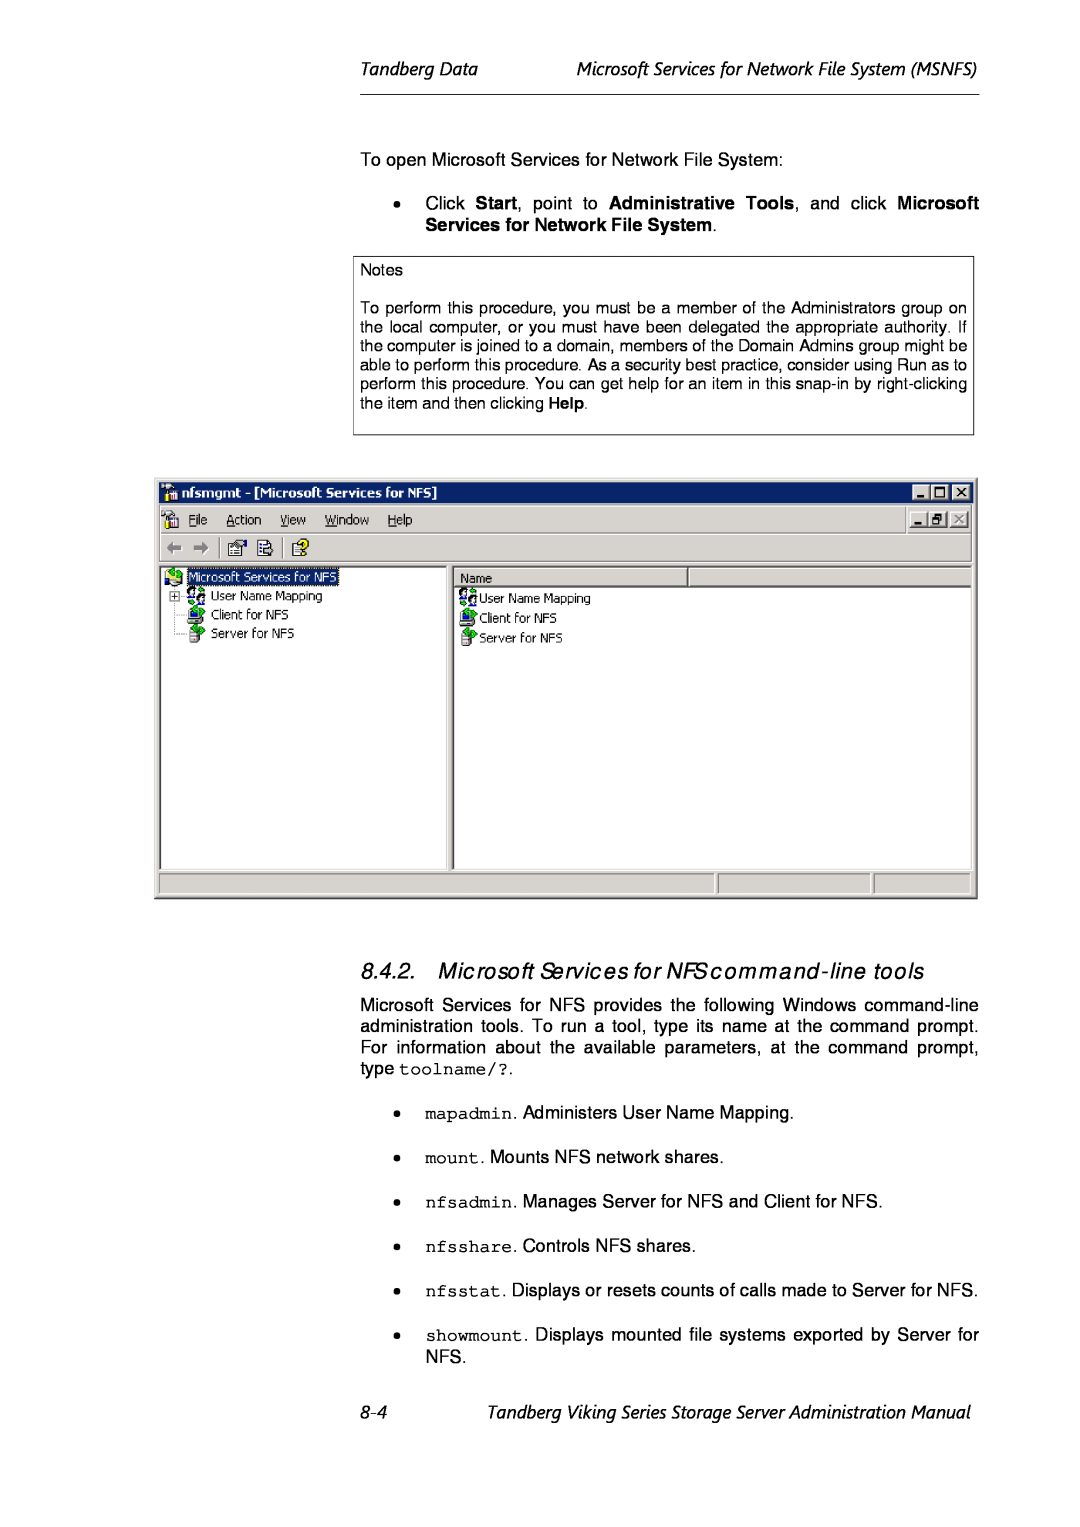 Tandberg Data Viking FS-1500, Viking FS-1600, Viking FS-412 manual Microsoft Services for NFS command-line tools 